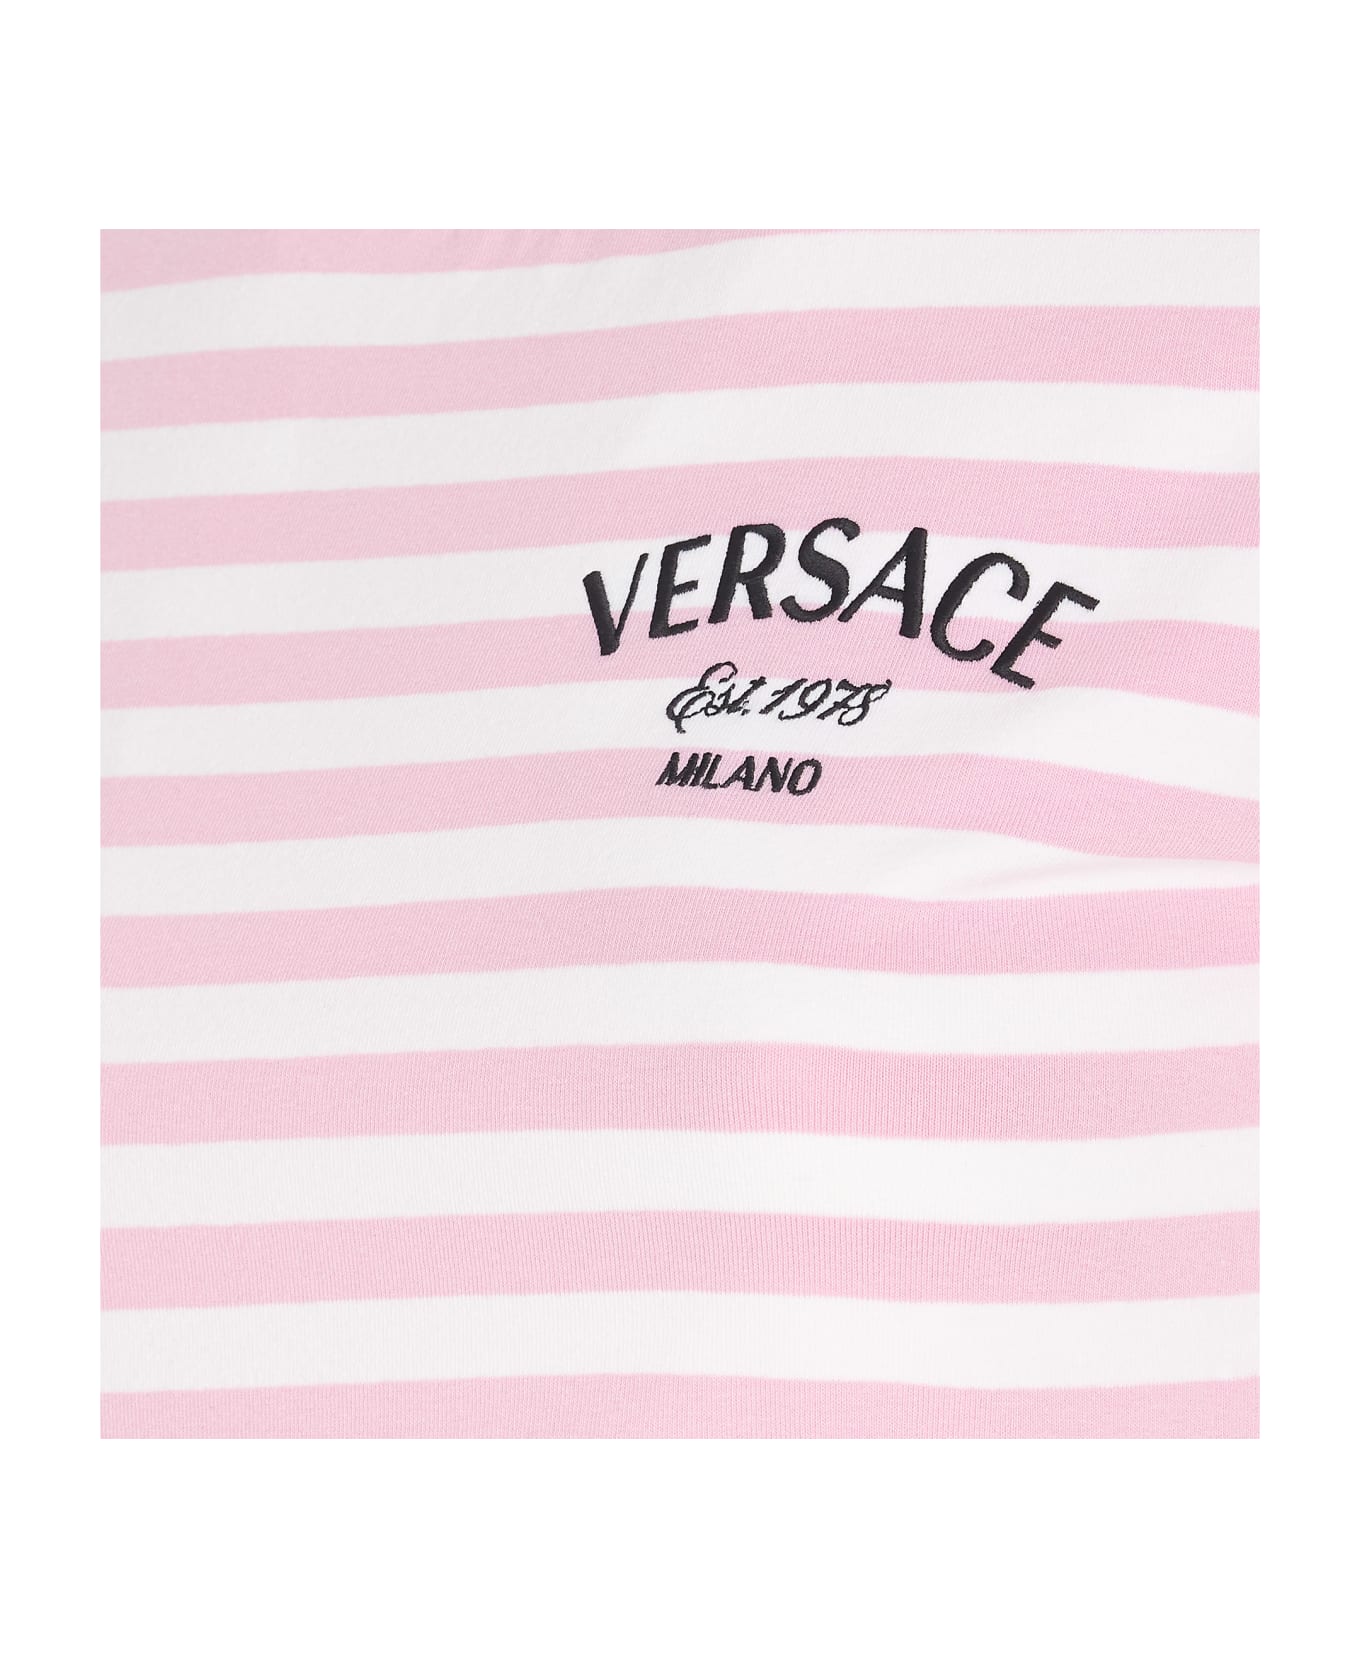 Versace Nautical Stripe T-shirt - Pink